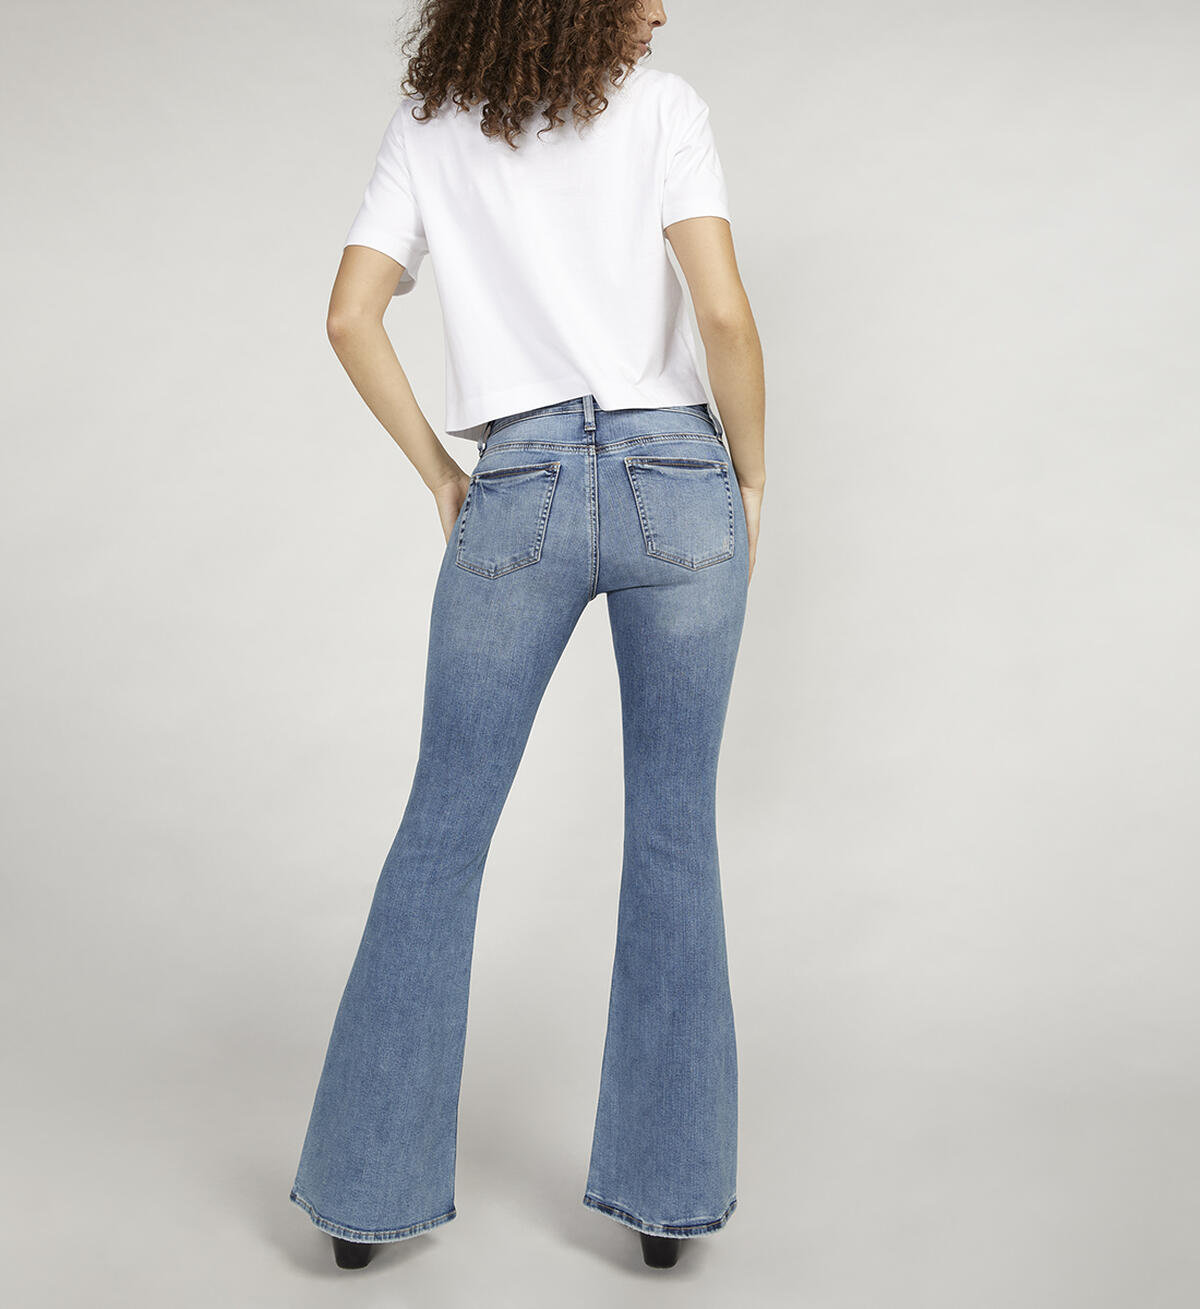 Suki Mid Rise Flare Leg Jeans, Indigo, hi-res image number 1